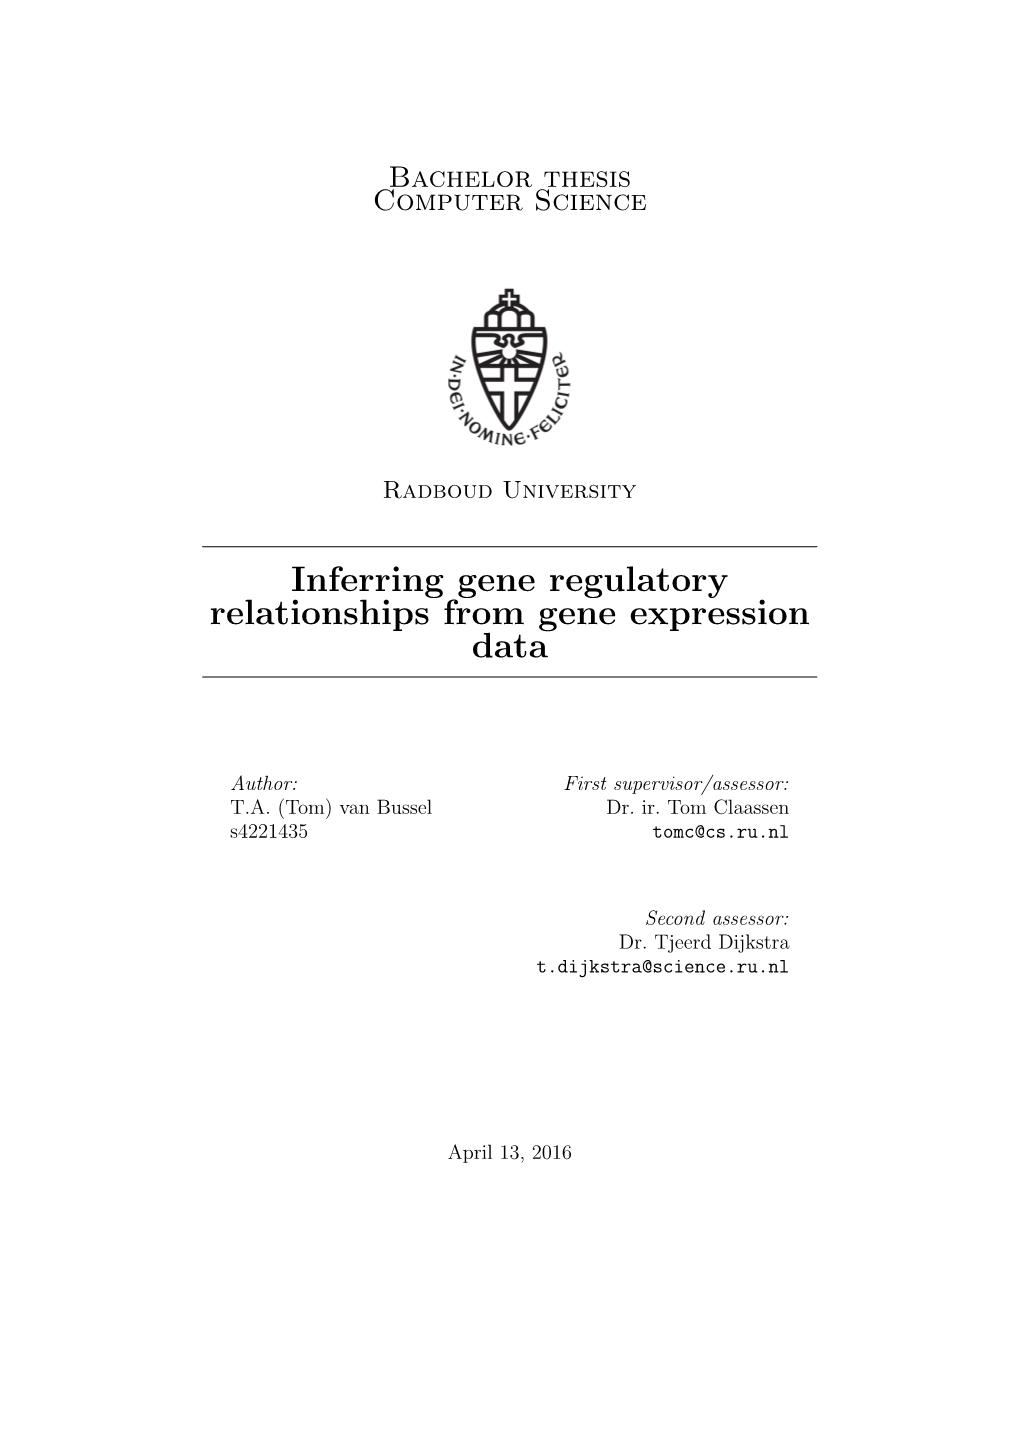 Inferring Gene Regulatory Relationships from Gene Expression Data